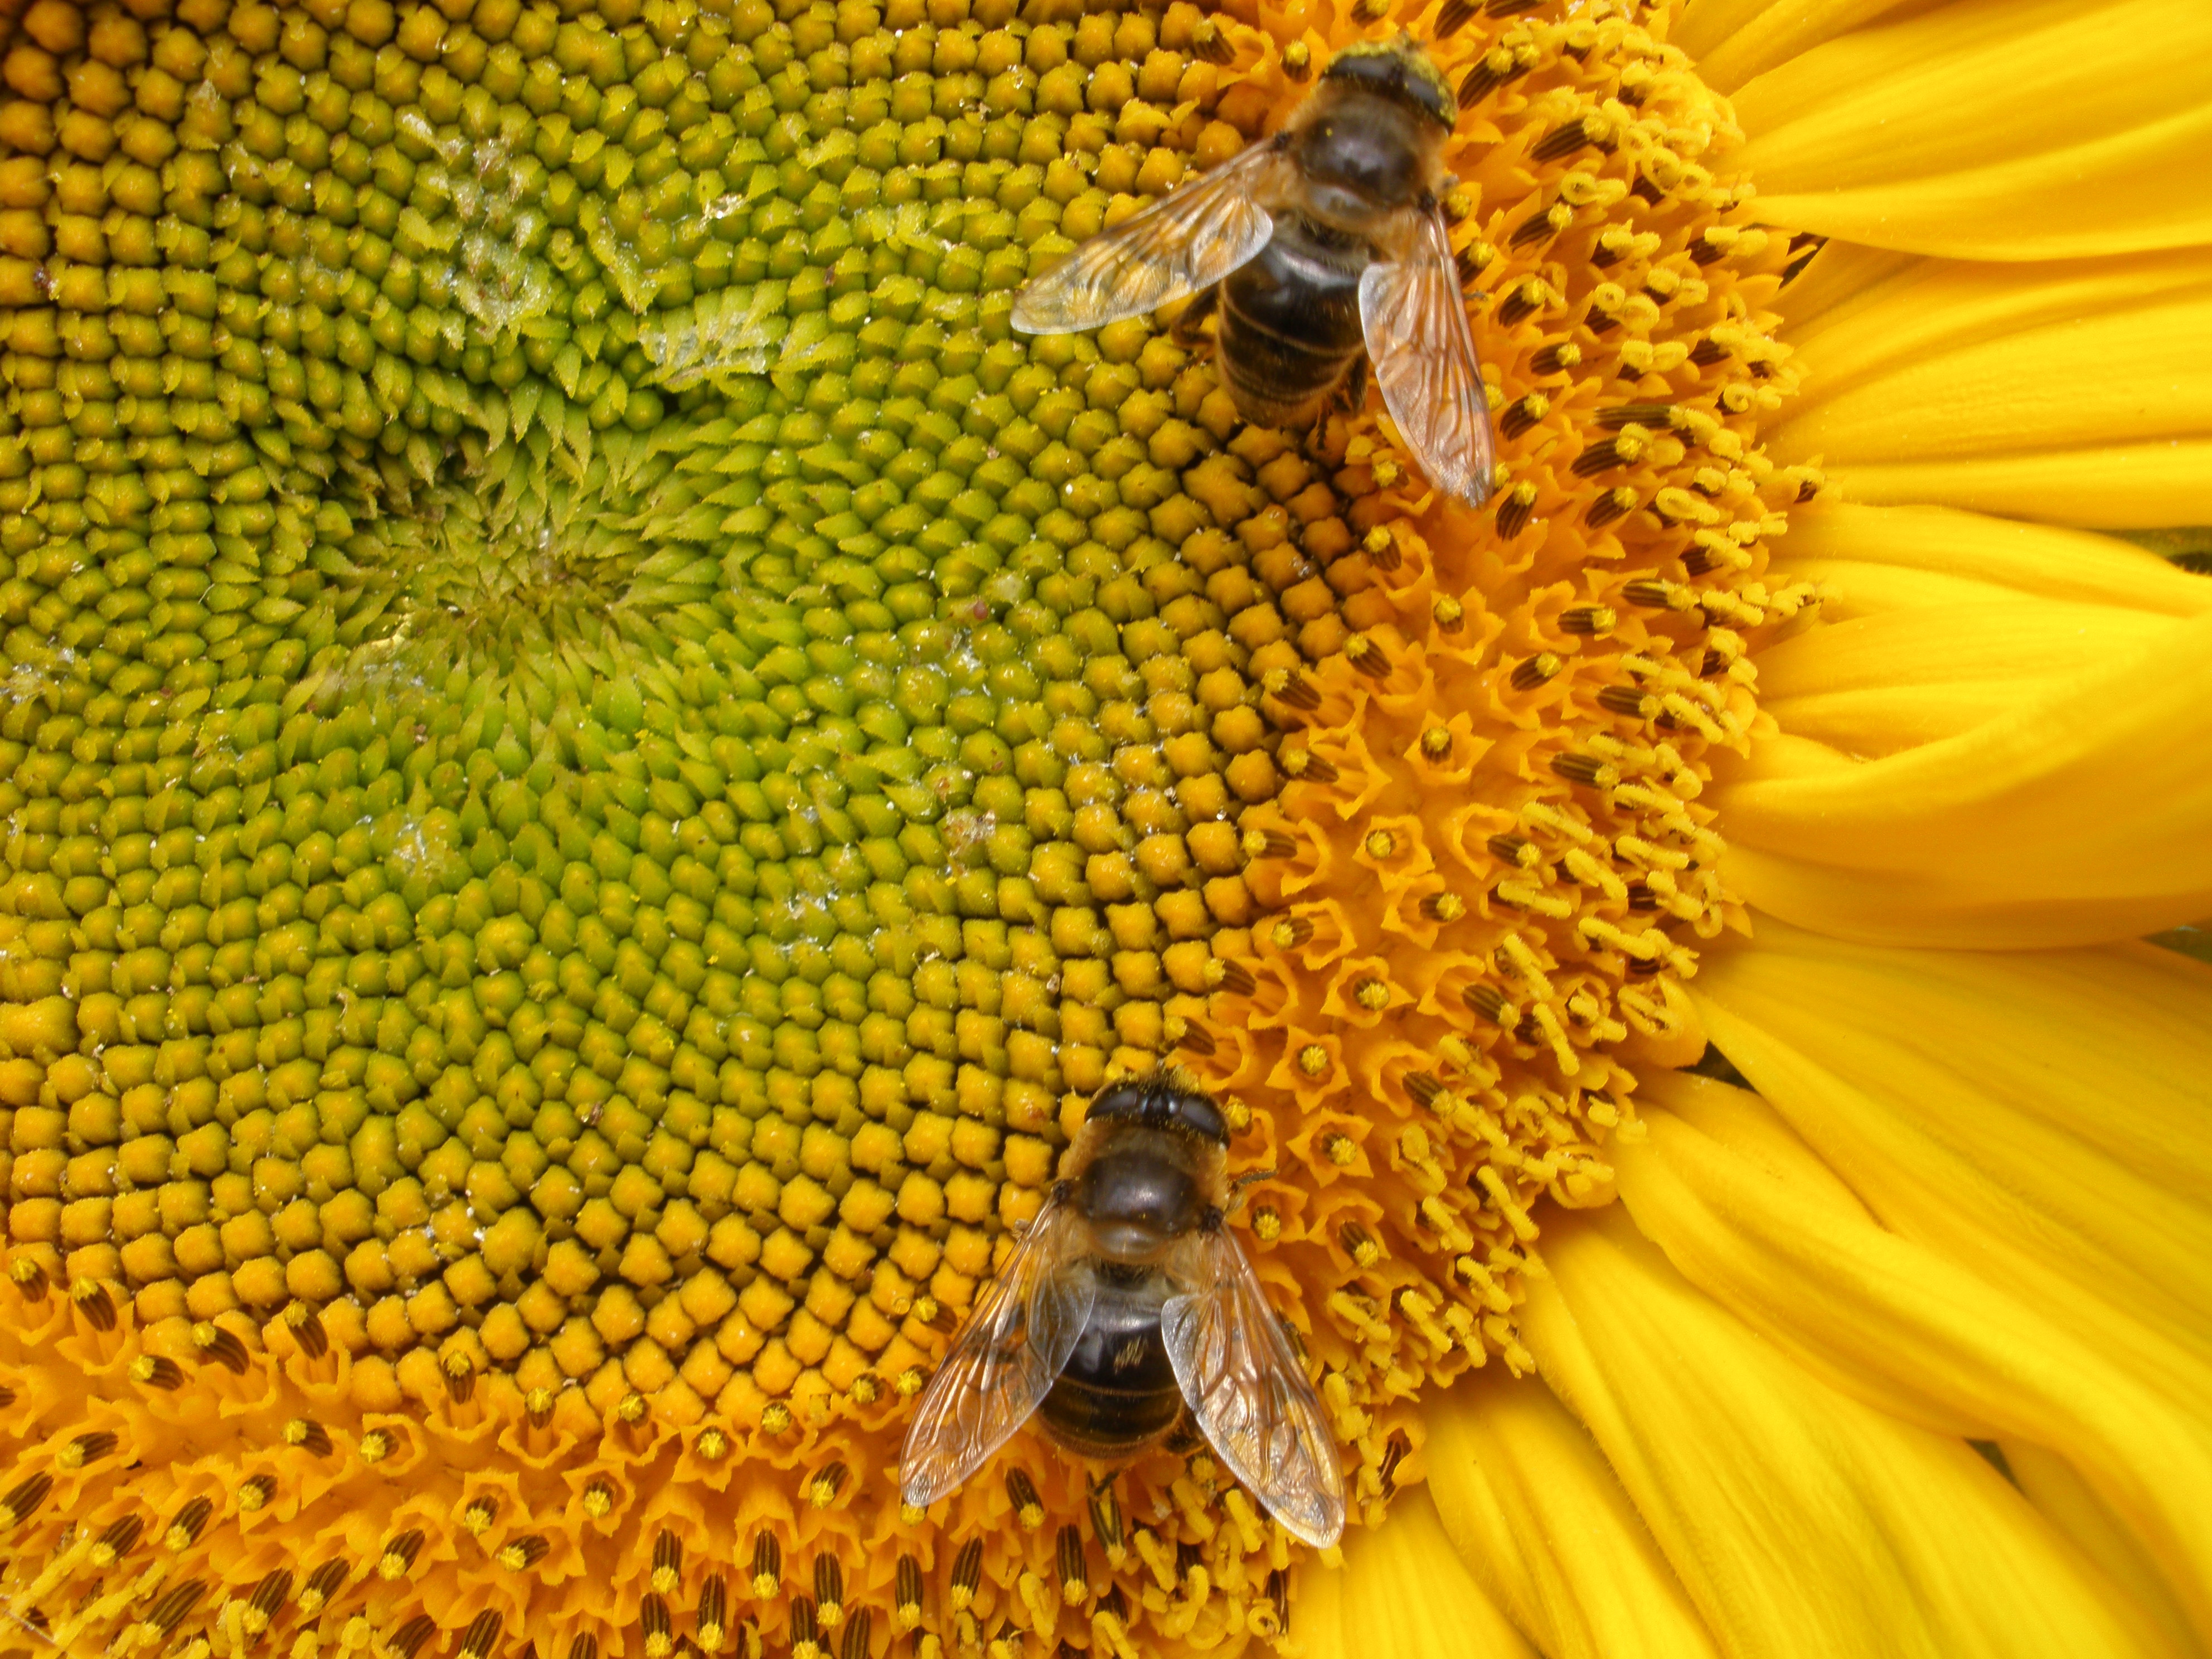 File:Bees on sunflower.JPG - Wikimedia Commons